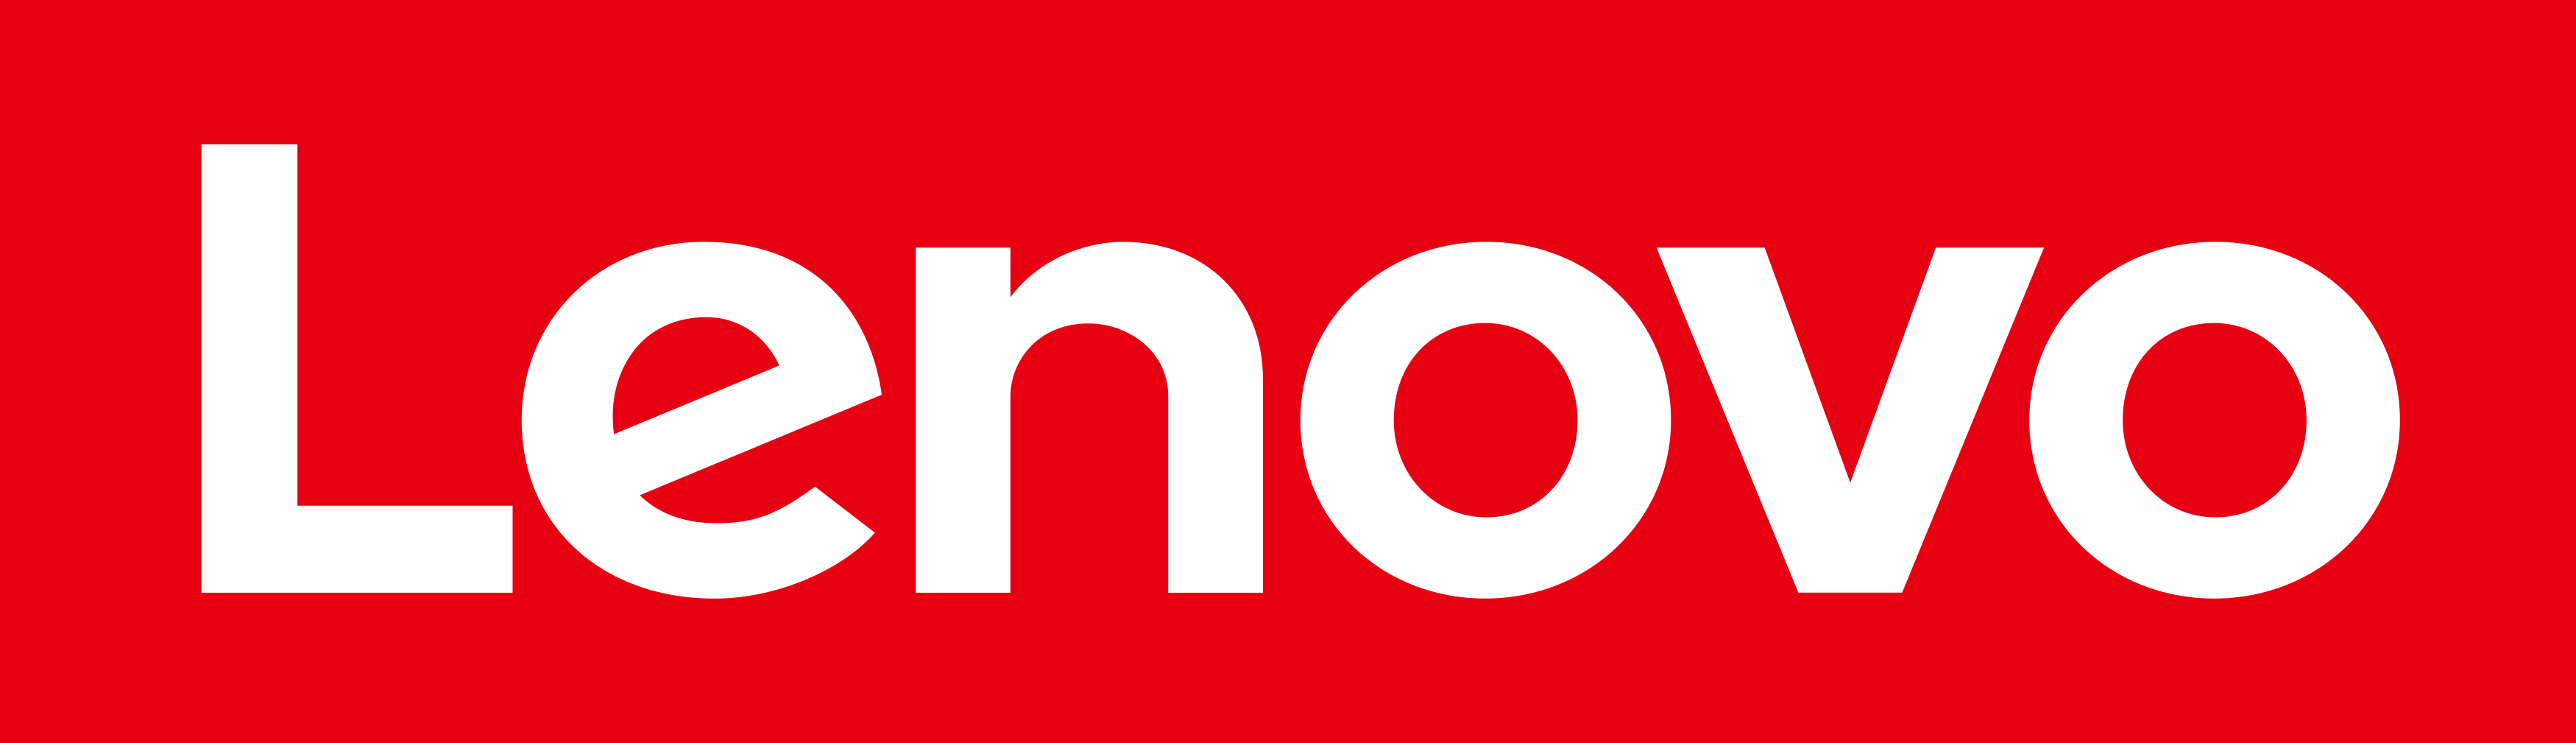 logo of lenovo